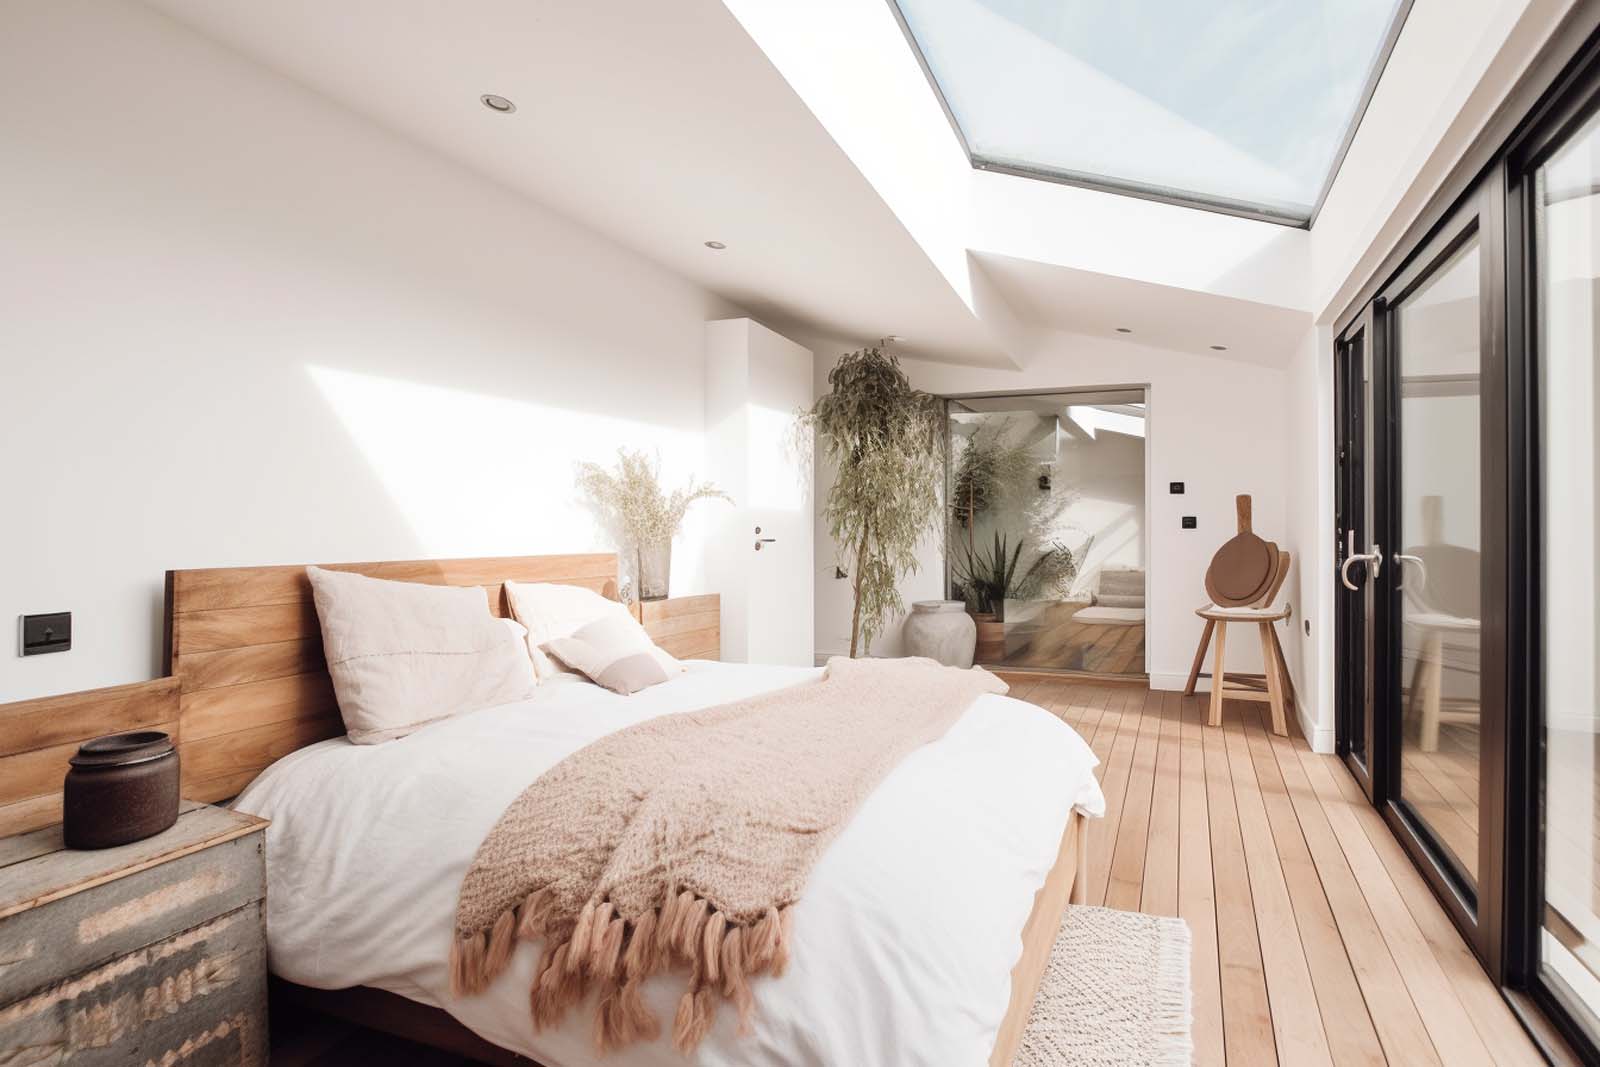 bedroom-skylights-roof-window-house-interior-a-lot-of-light-bedroom-natural-light